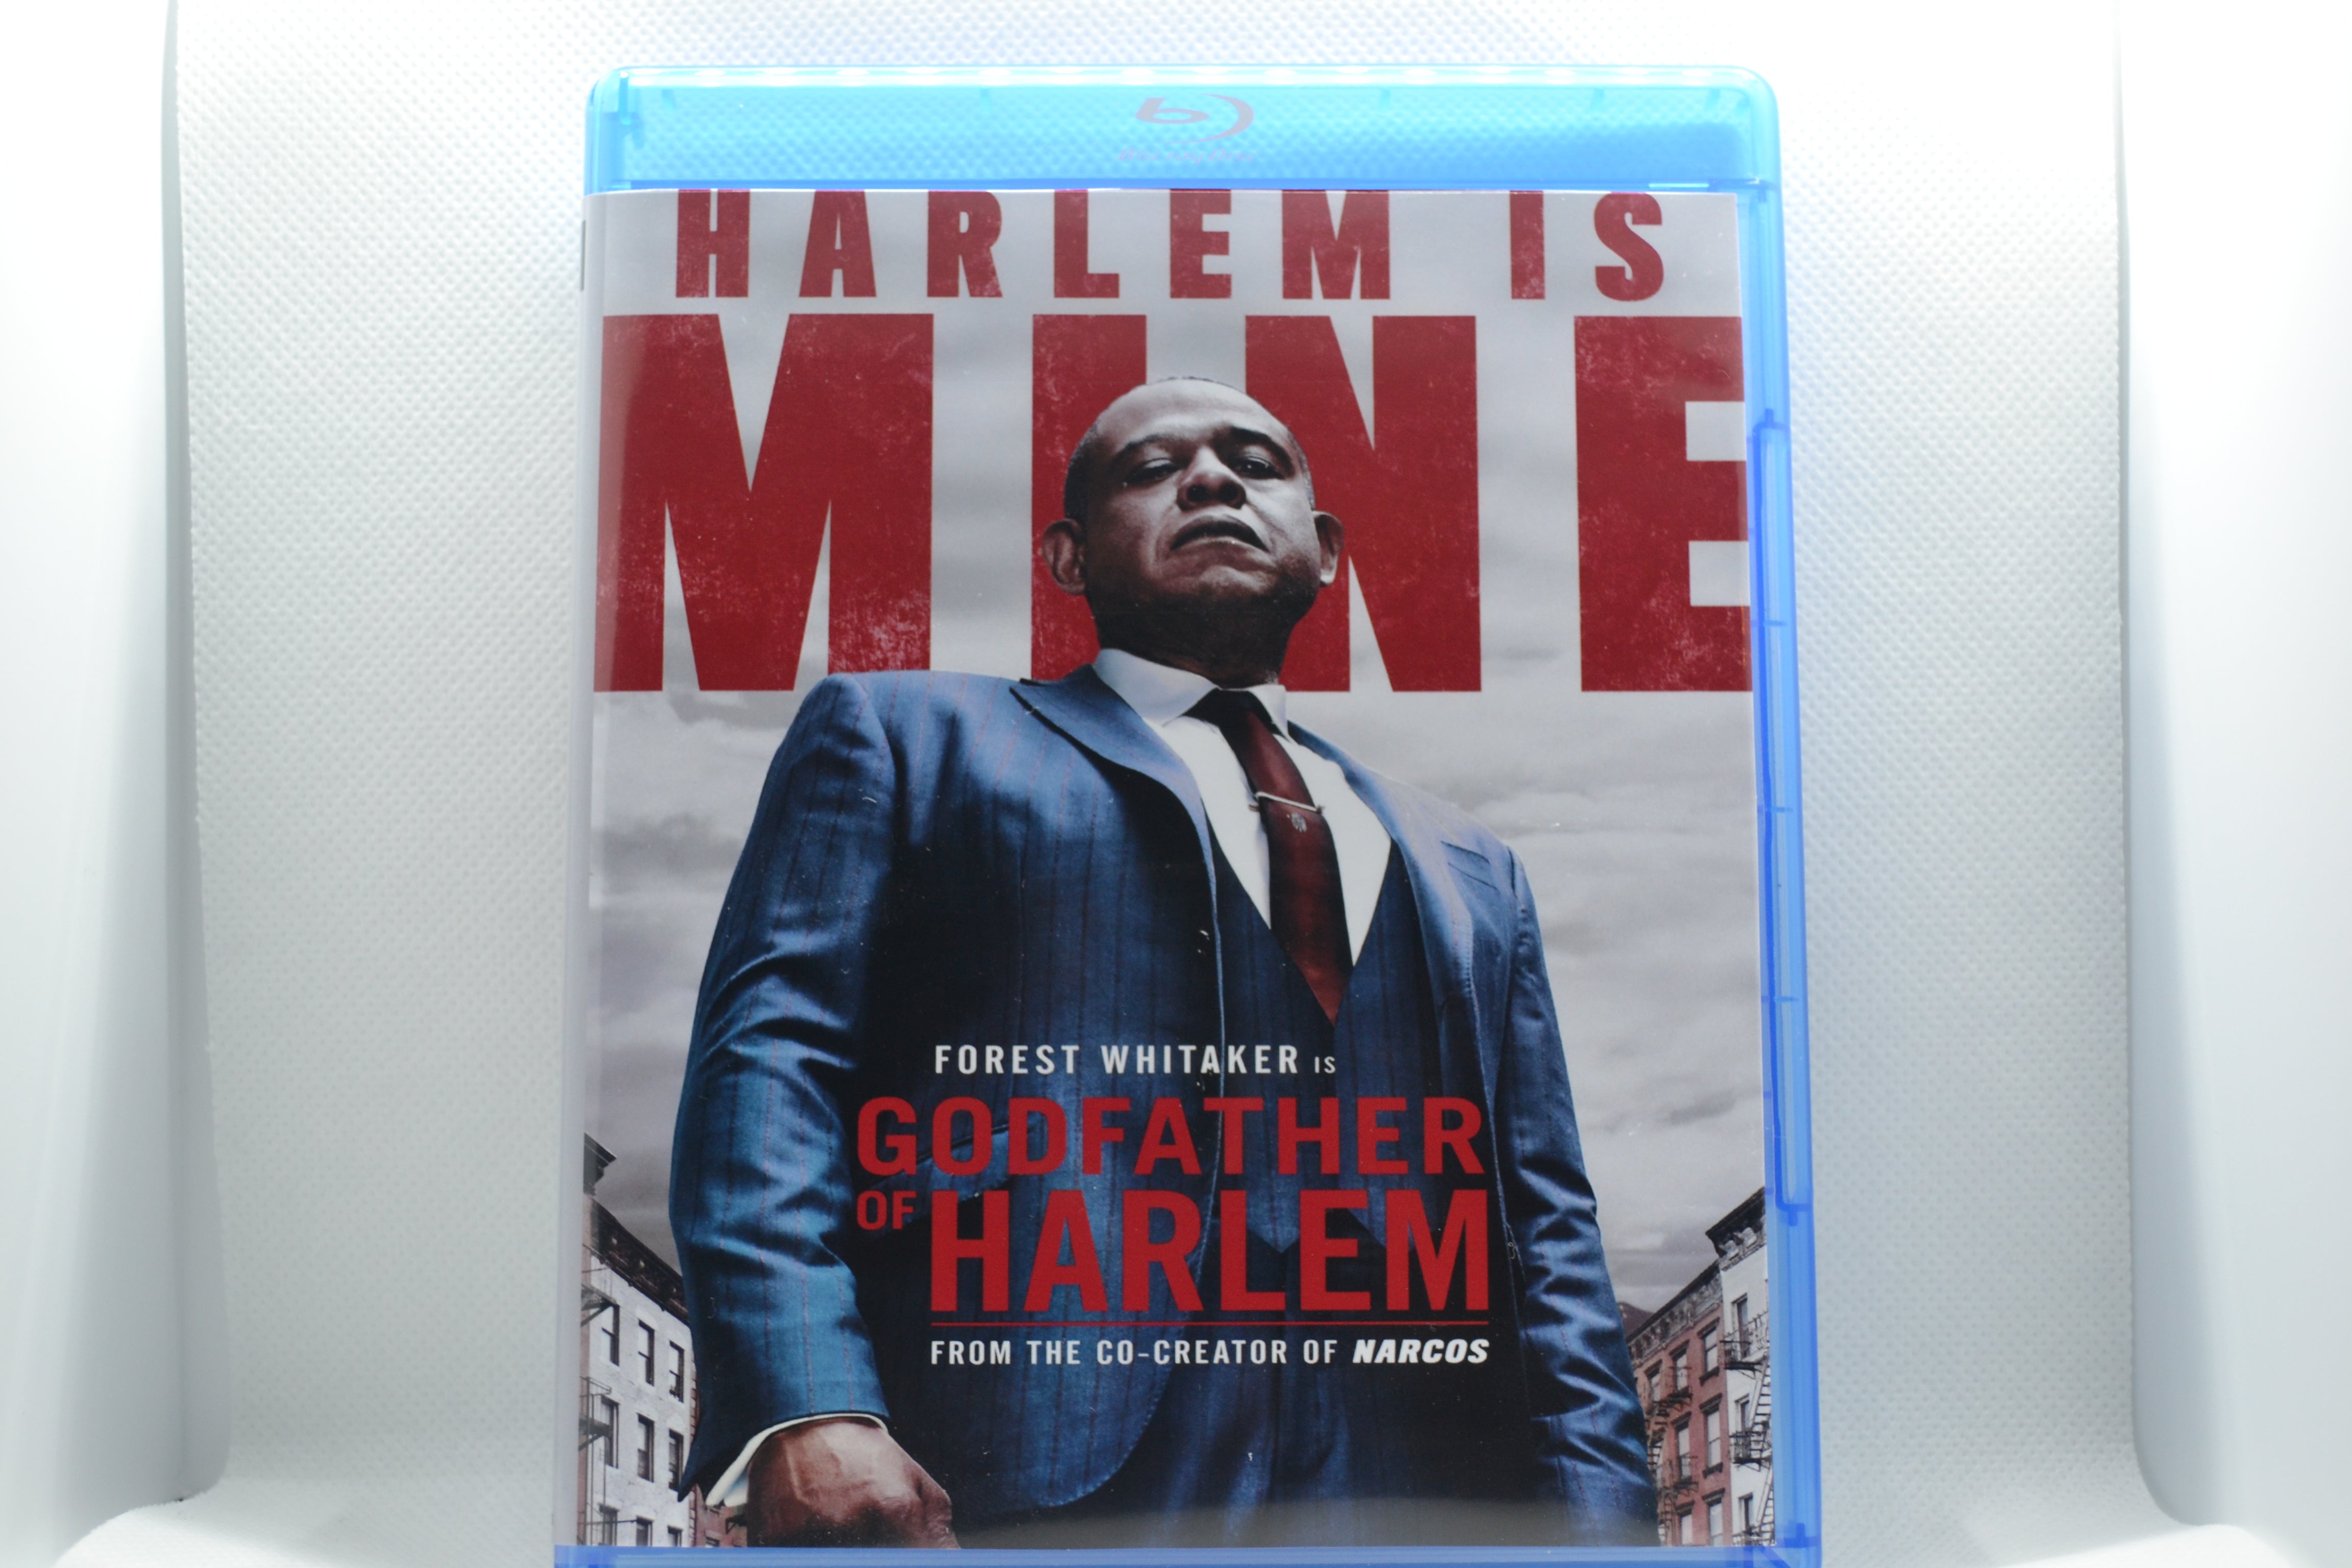 Godfather Of Herlem Season 1 Blu-Ray Set